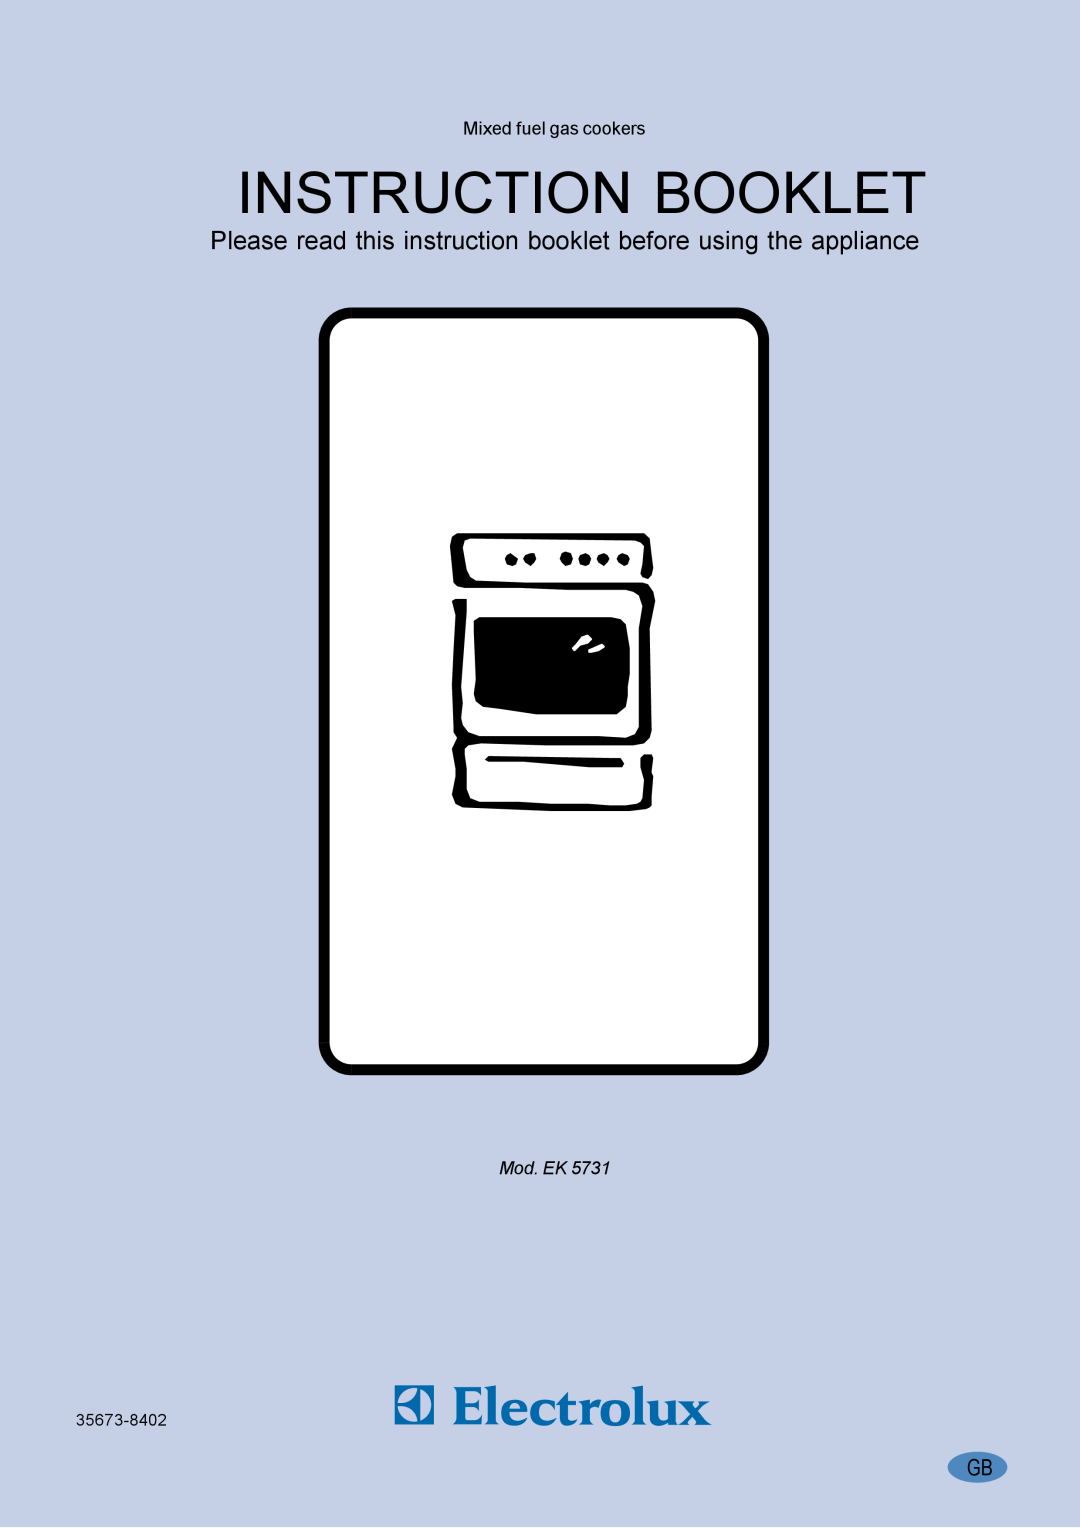 Electrolux EK 5731 manual Instruction Booklet, Please read this instruction booklet before using the appliance, Mod. EK 